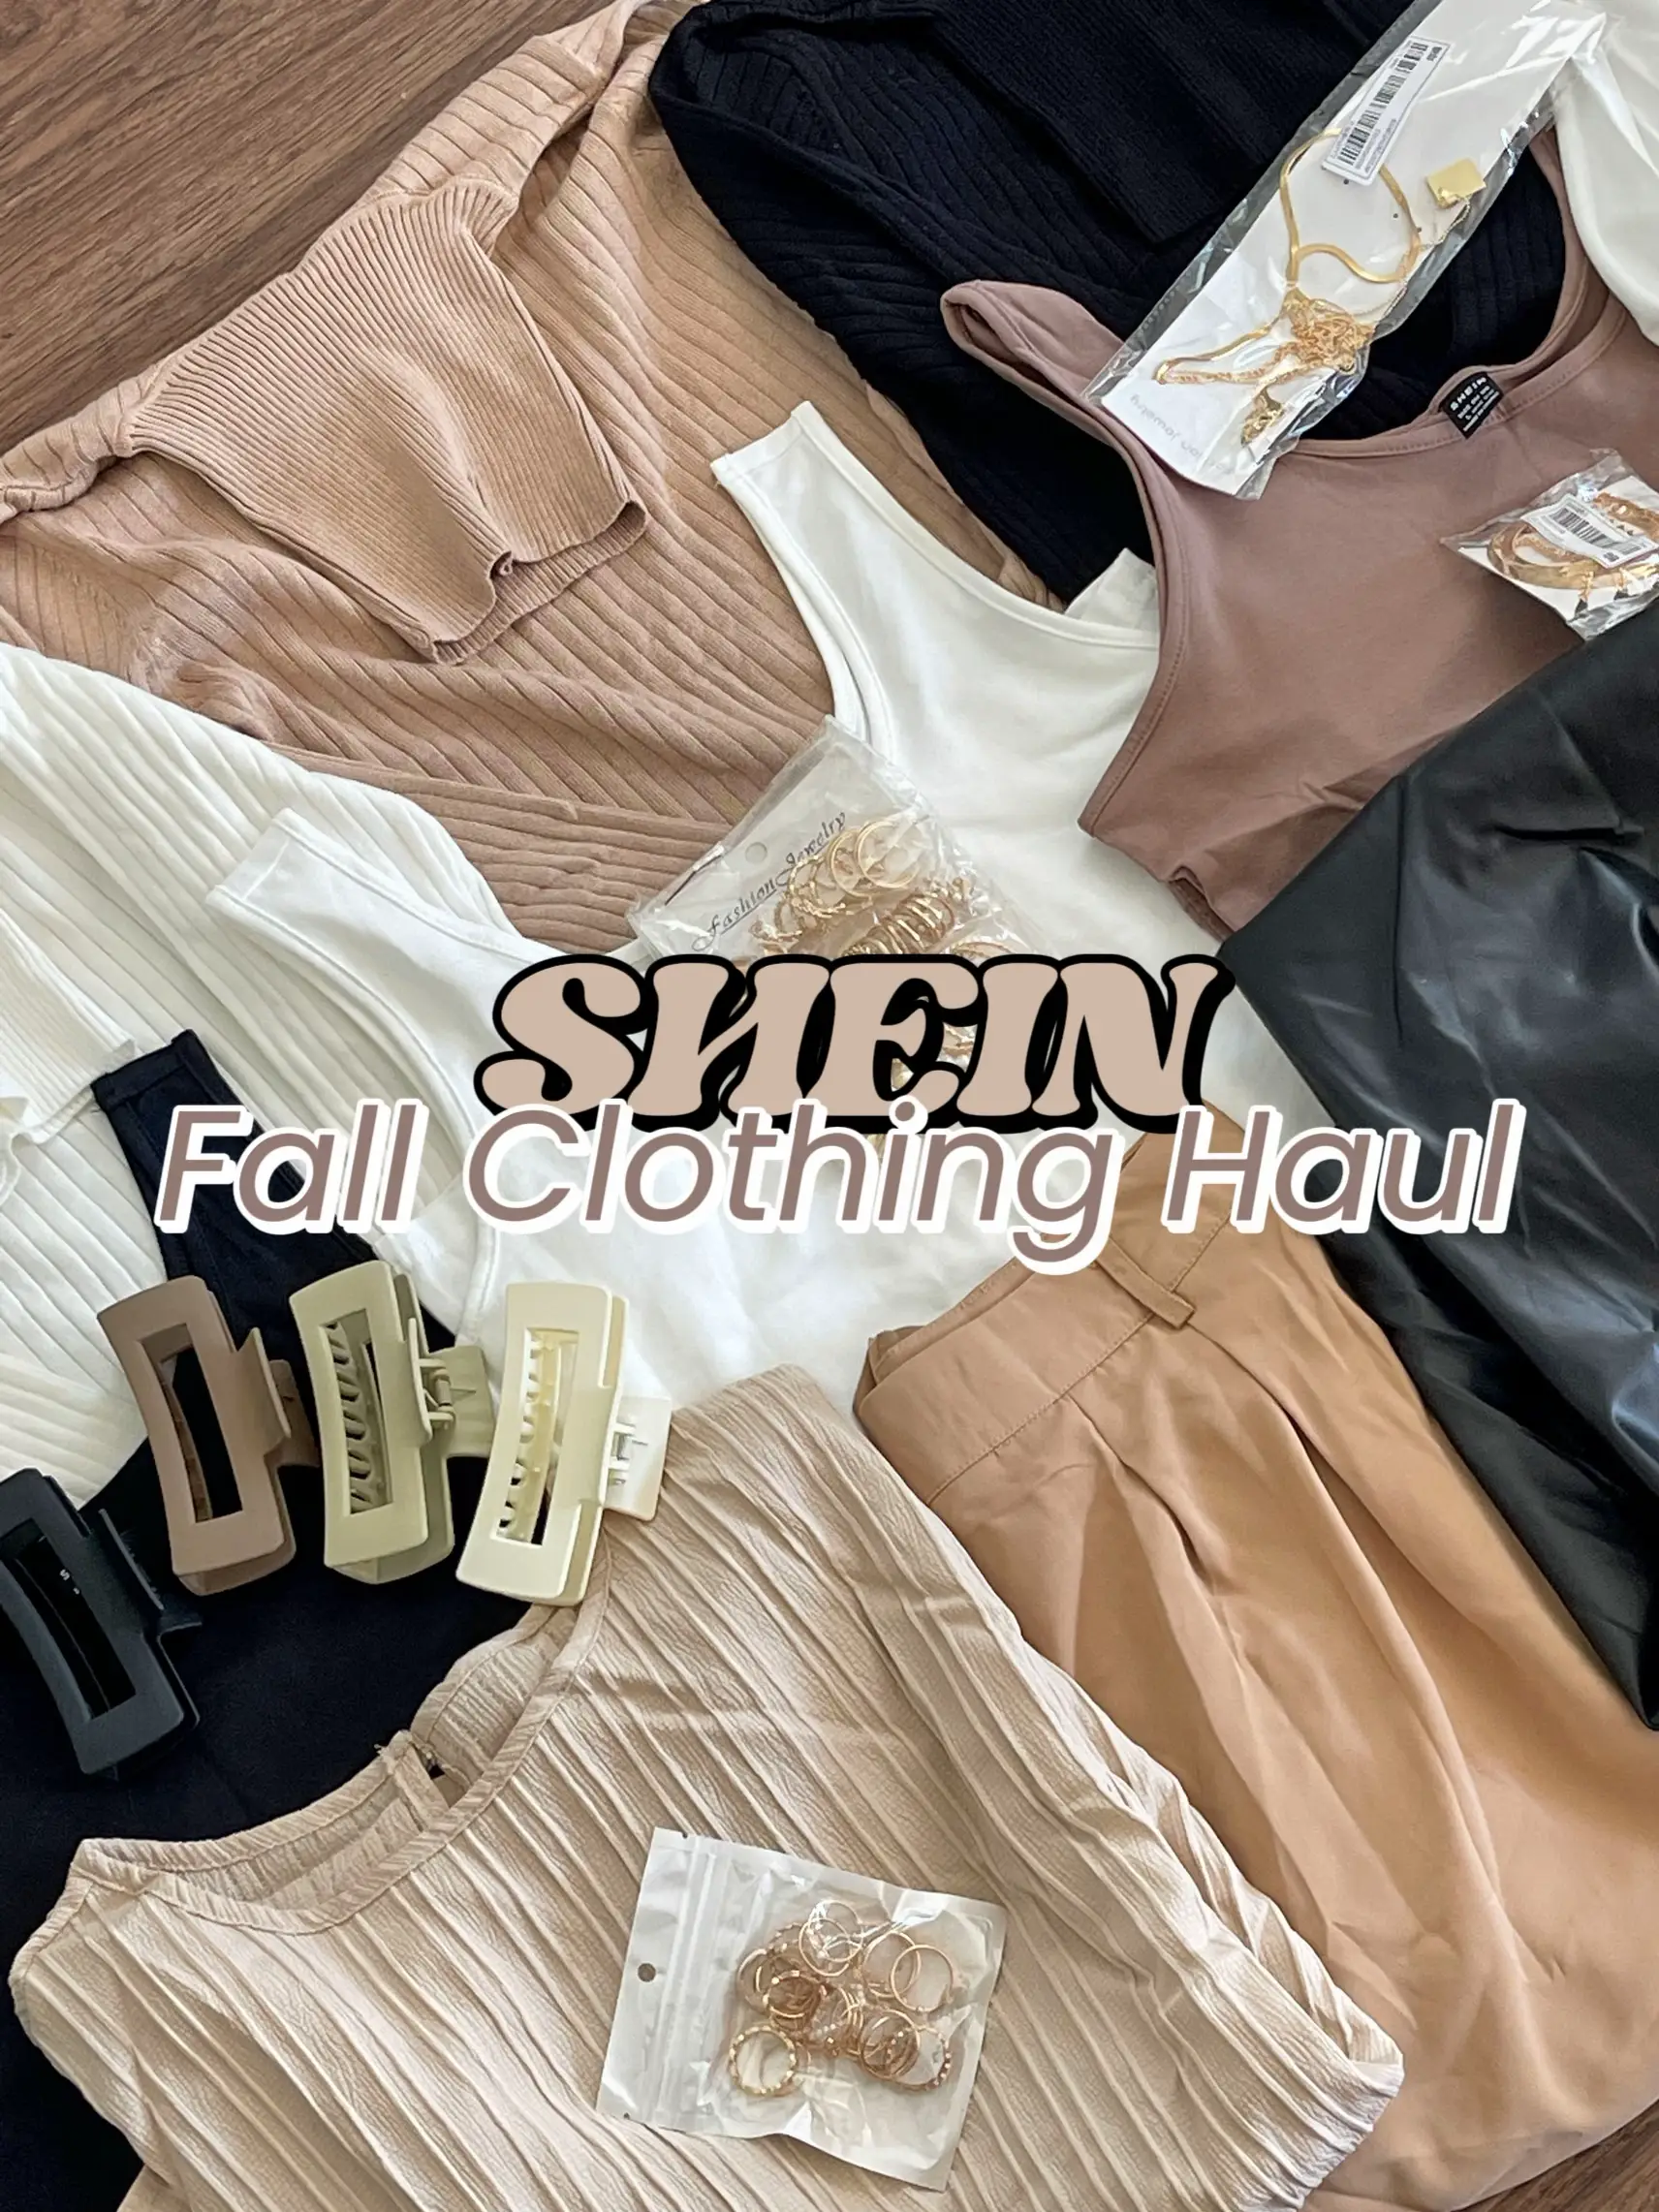 SheIn Strapless Bra Black Size M - $9 (18% Off Retail) New With